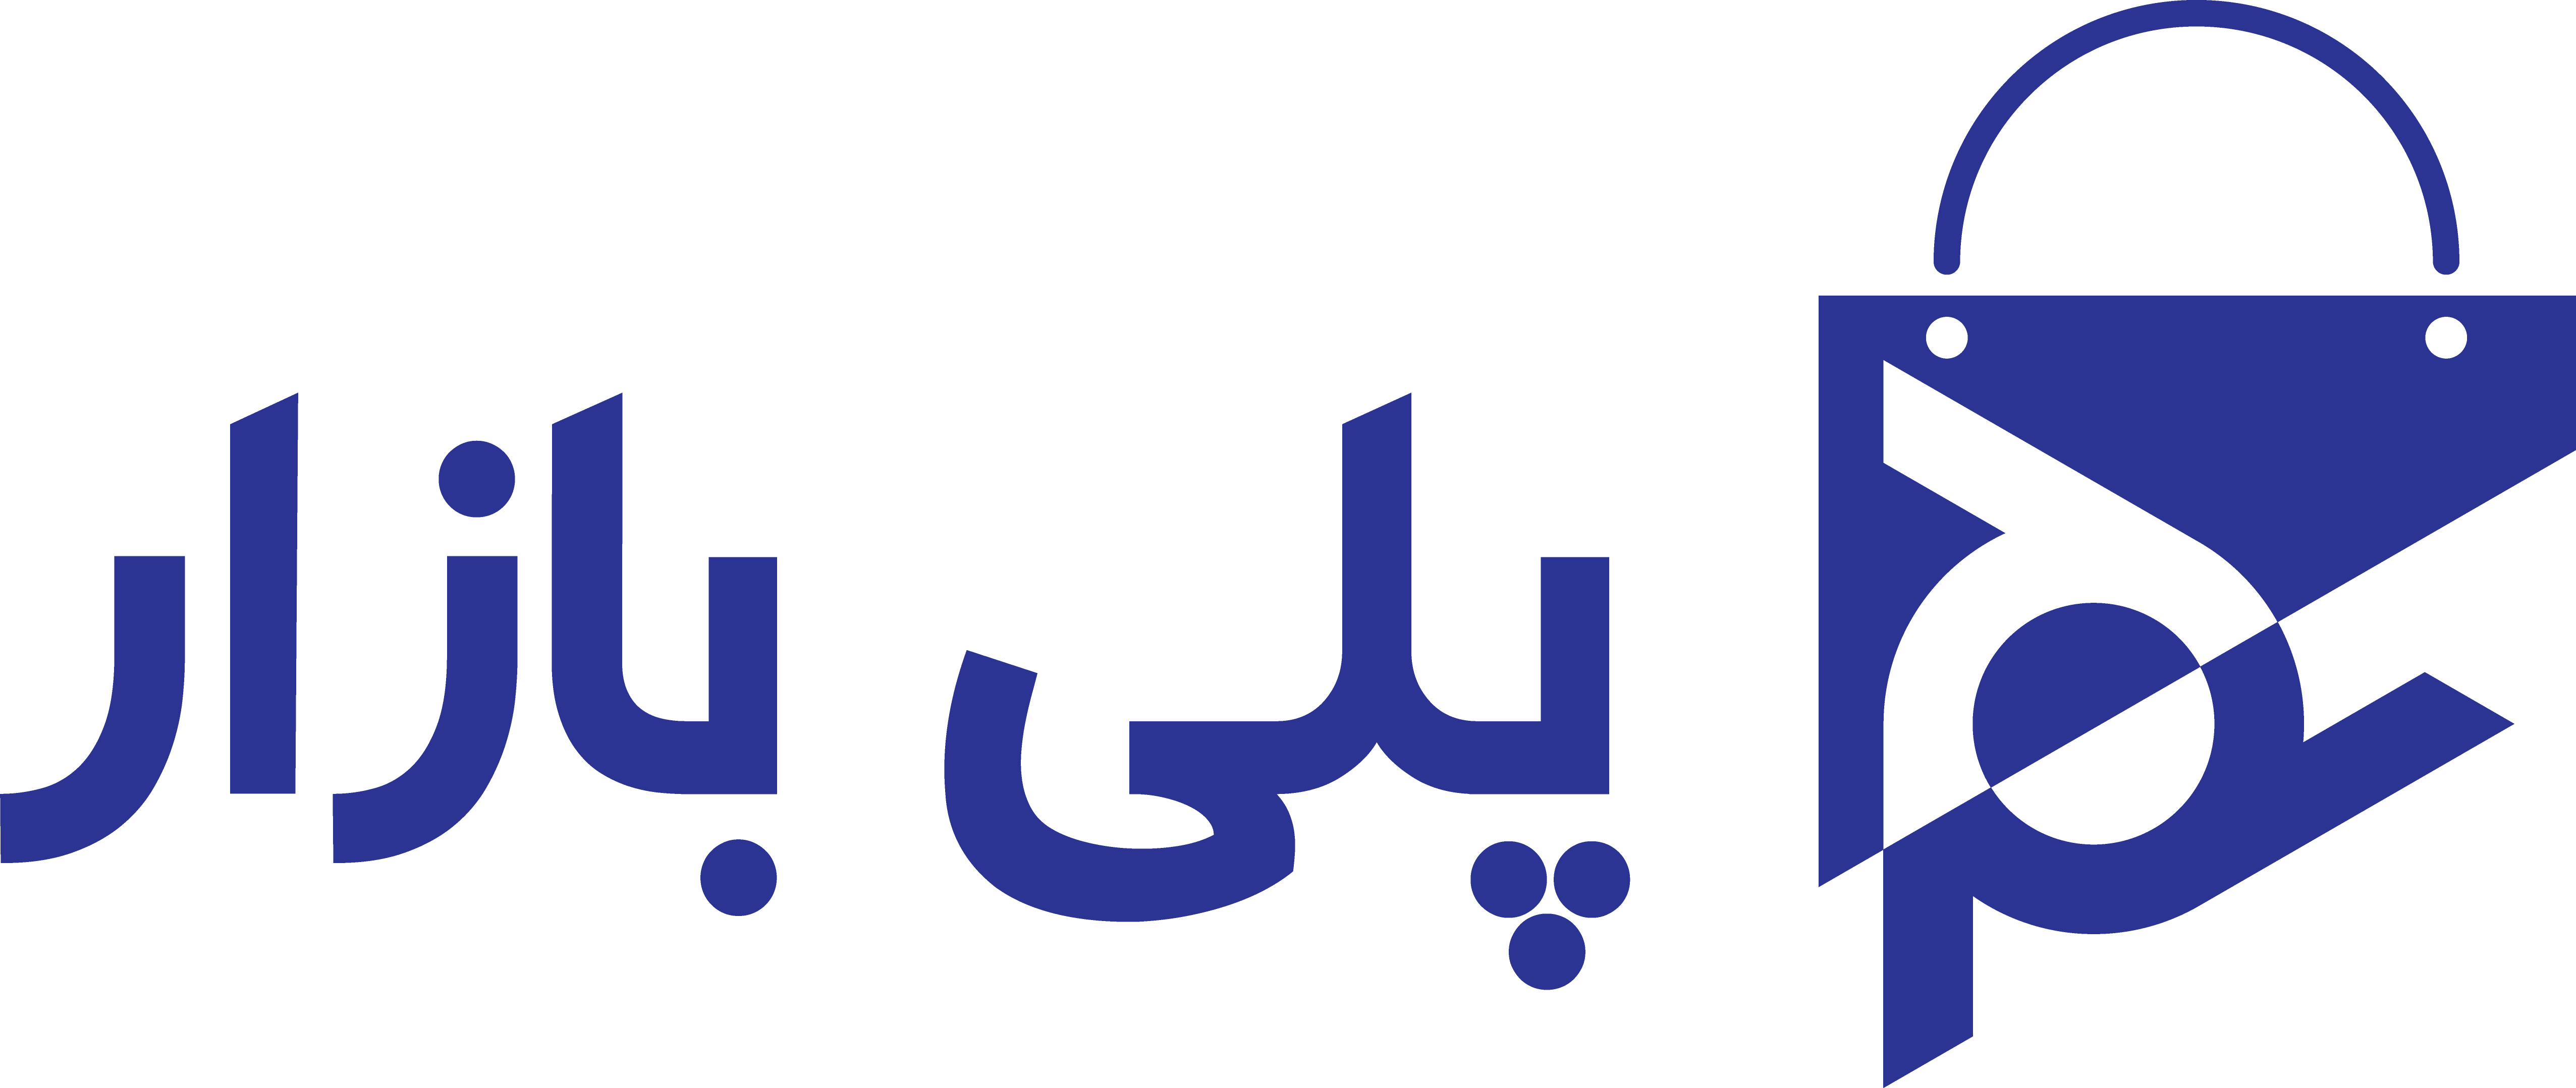 blue-polybazaar-logo